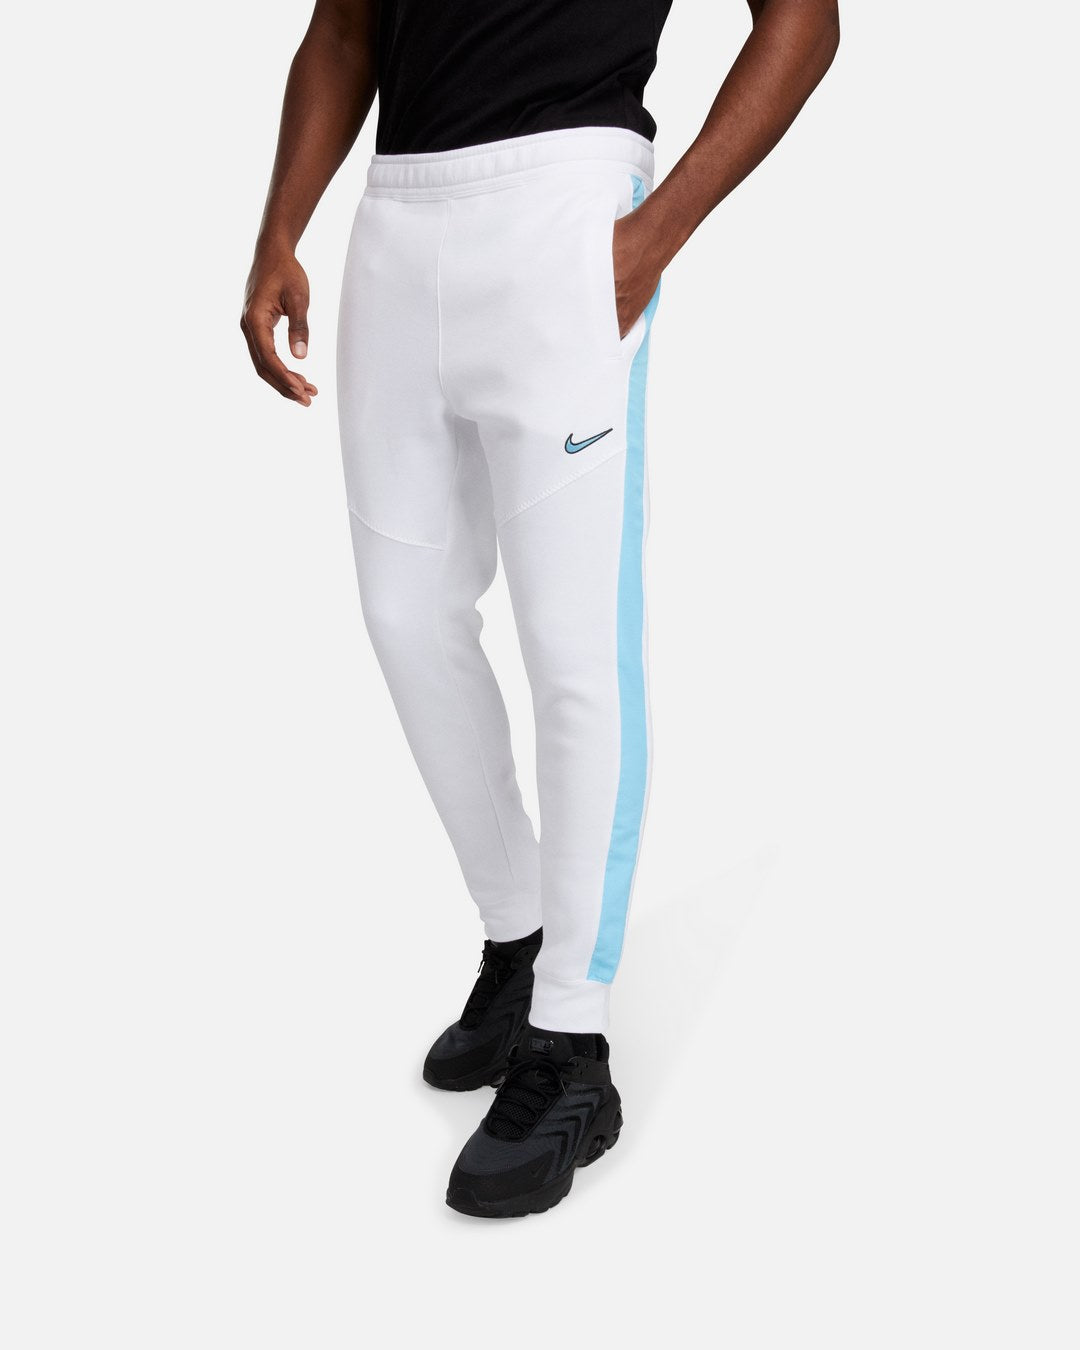 Nike Sportswear Pants - White/Blue